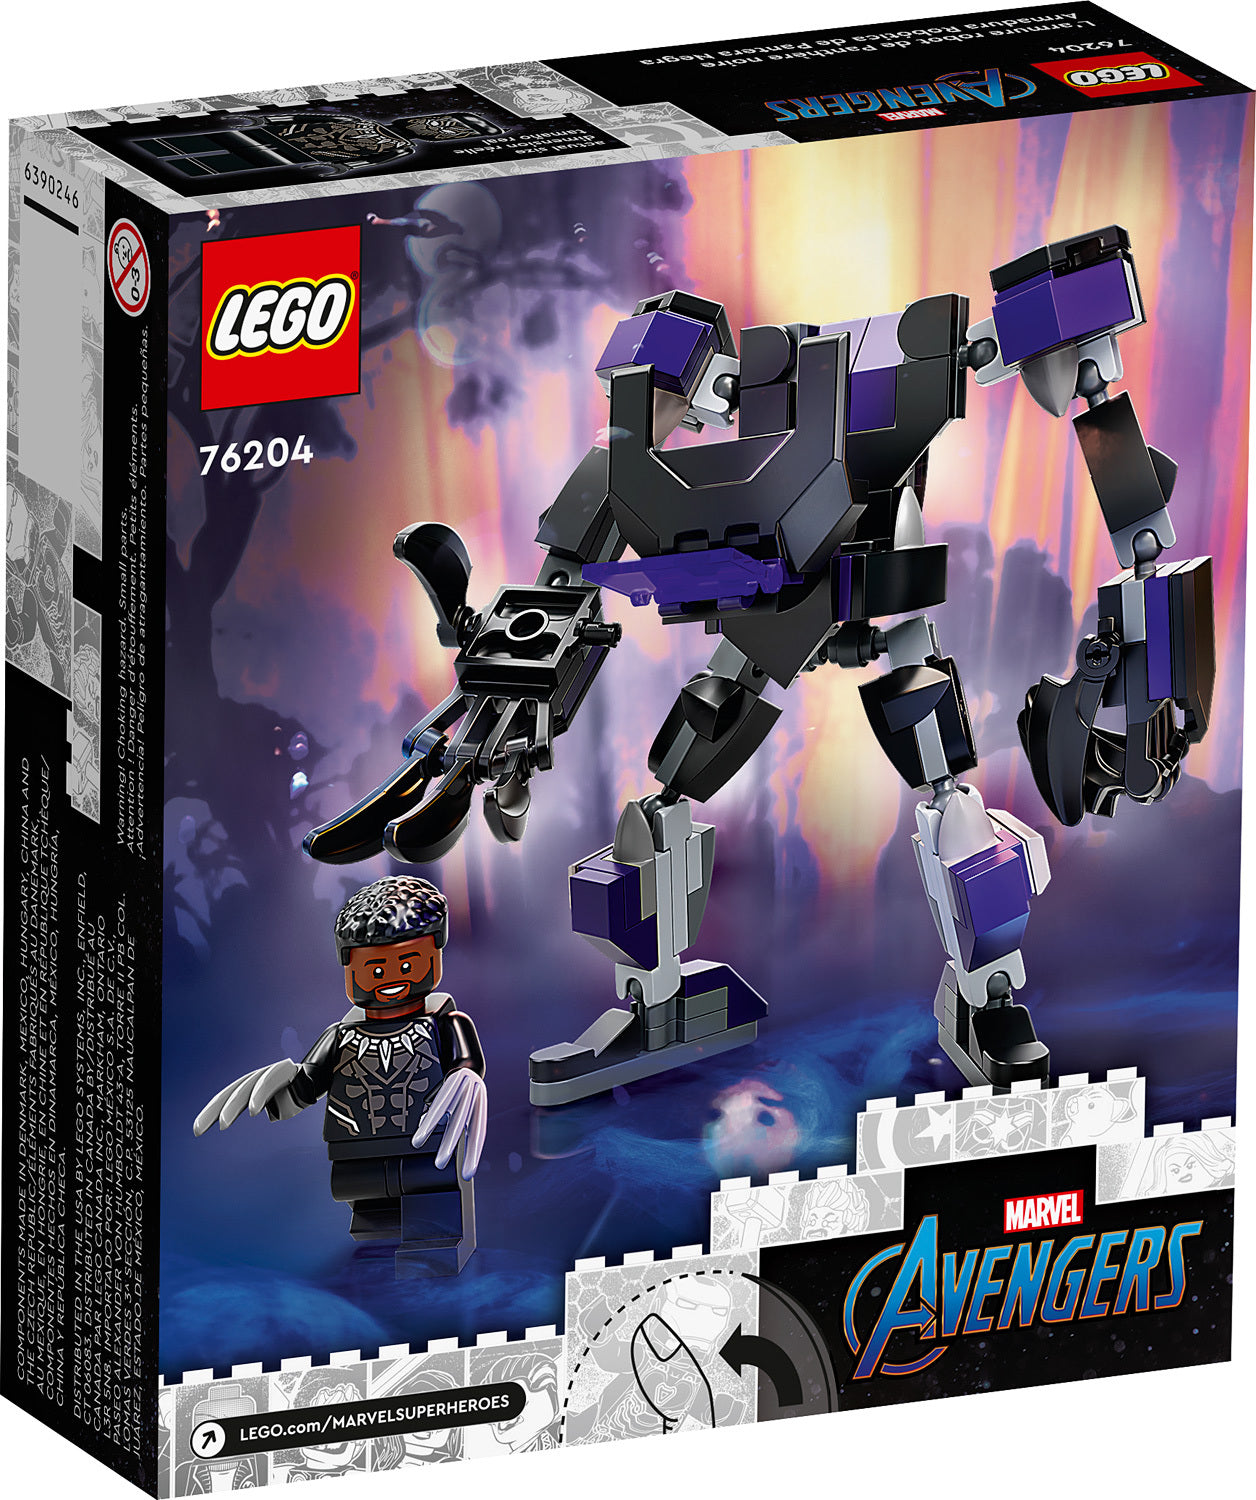 LEGO® Black Panther Mech Armor